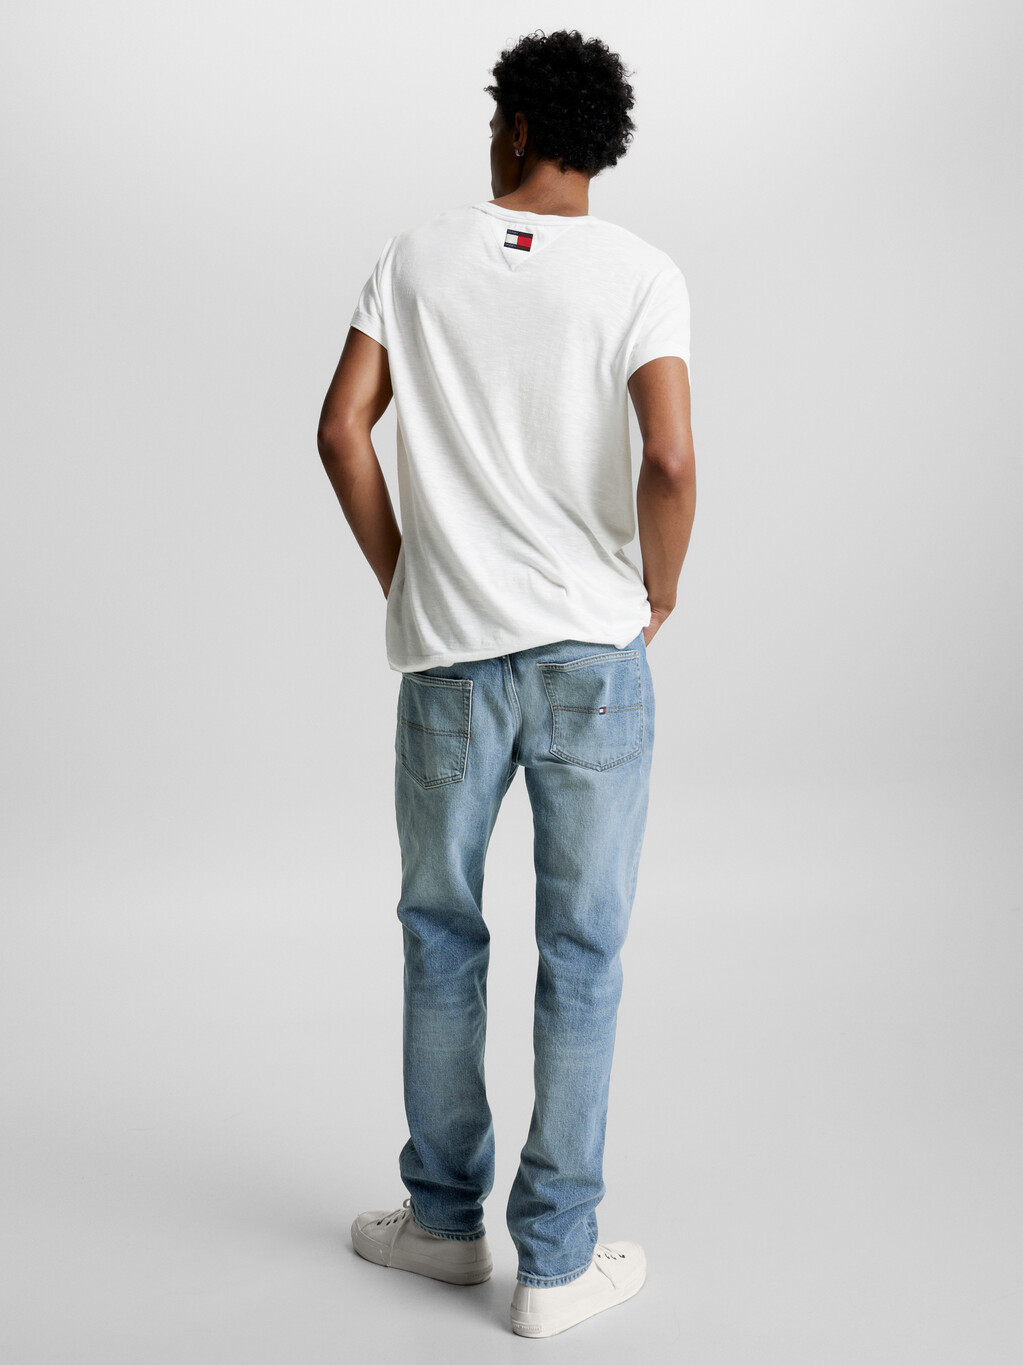 Tommy Hilfiger X Shawn Mendes T-Shirt, Th Optic White, hi-res